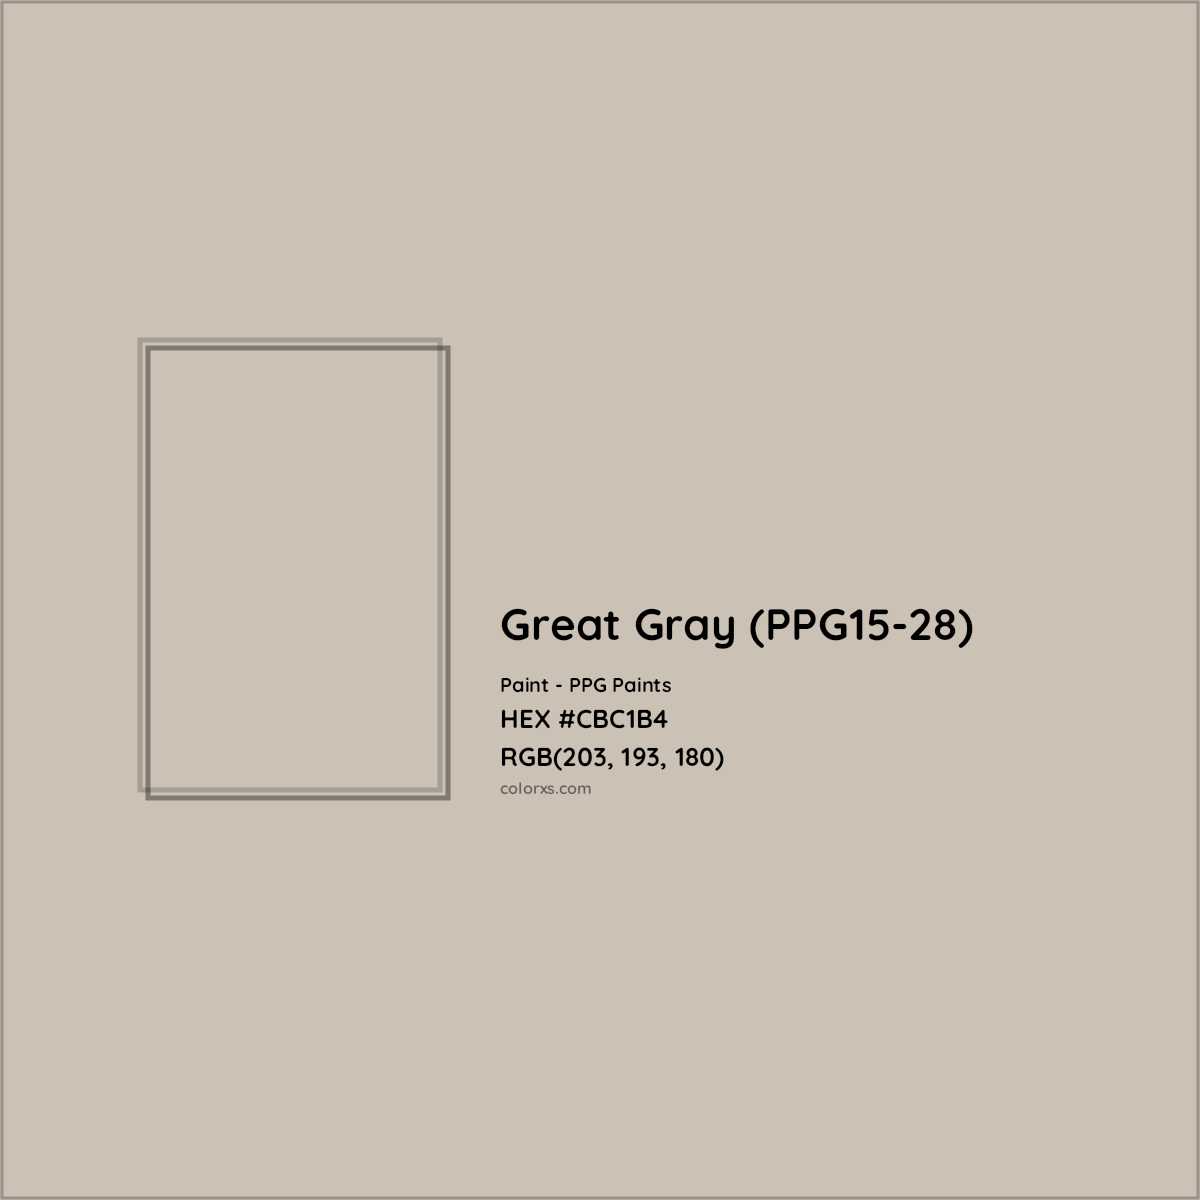 HEX #CBC1B4 Great Gray (PPG15-28) Paint PPG Paints - Color Code